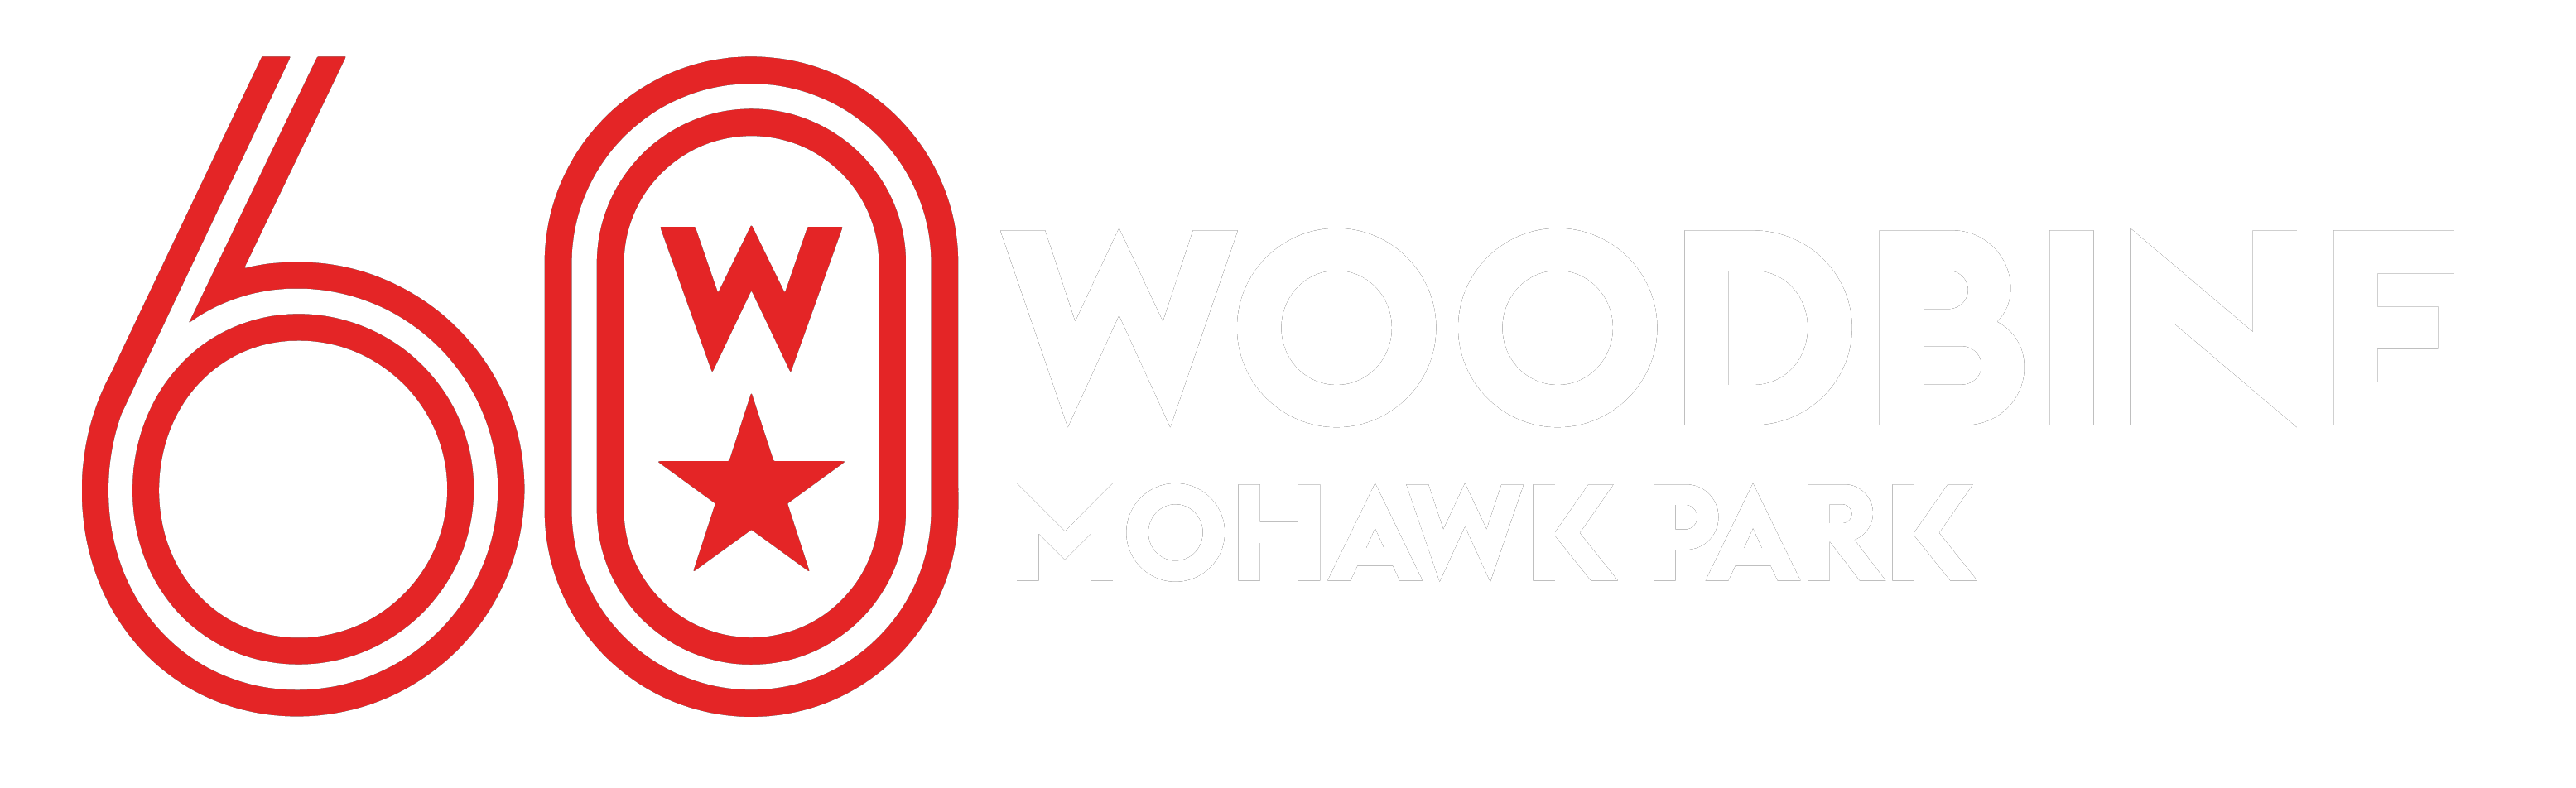 Woodbine Mohawk park